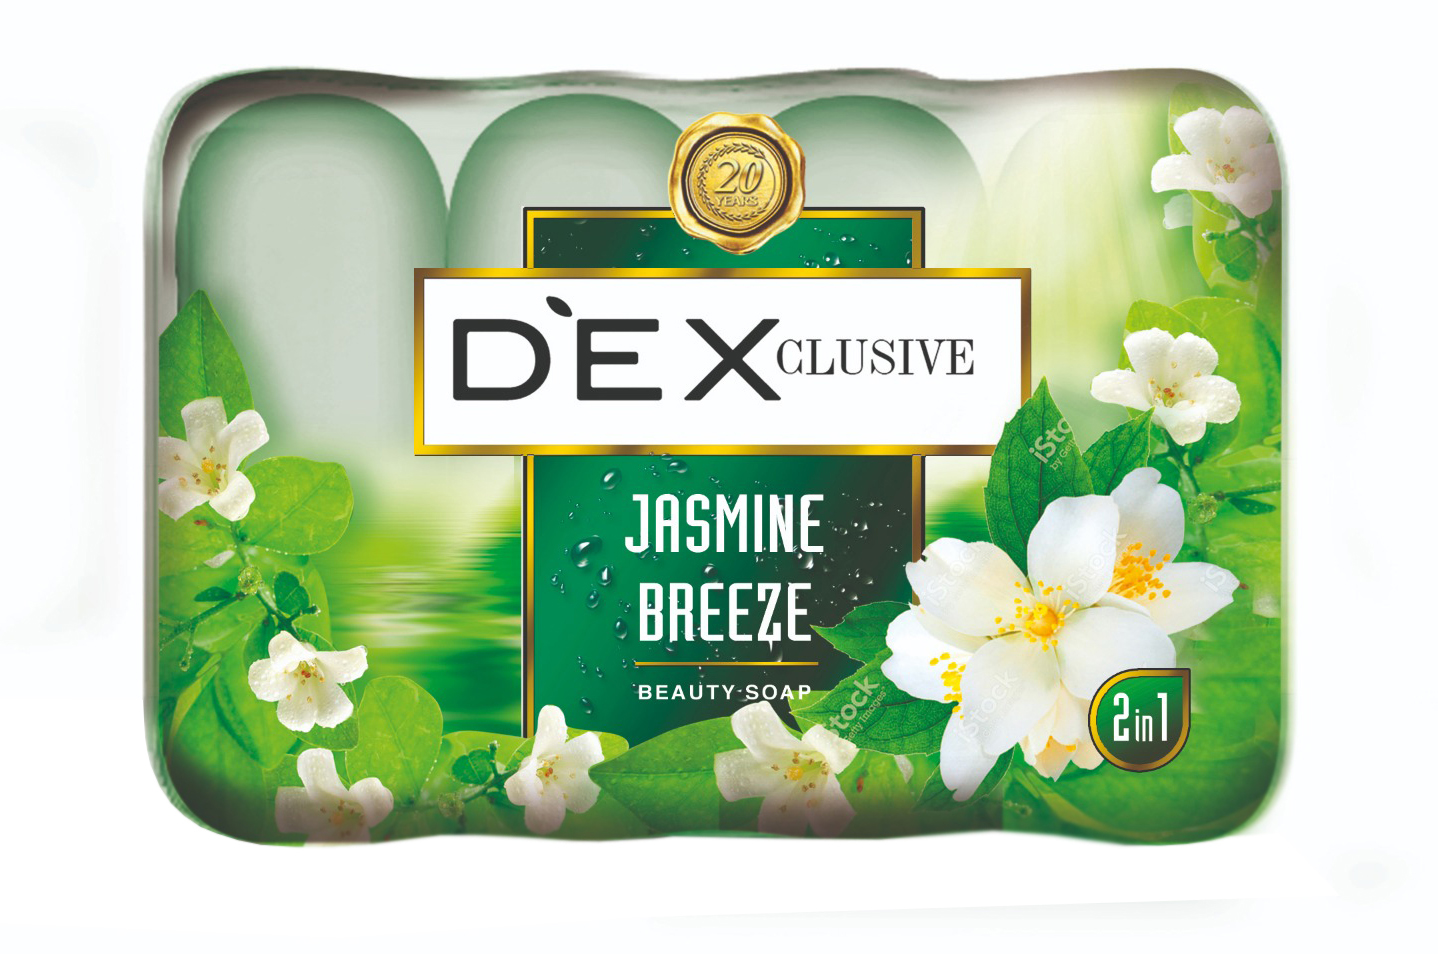 Двухцветное мыло DexClusive Beauty Soap Жасмин 4 х 85 г